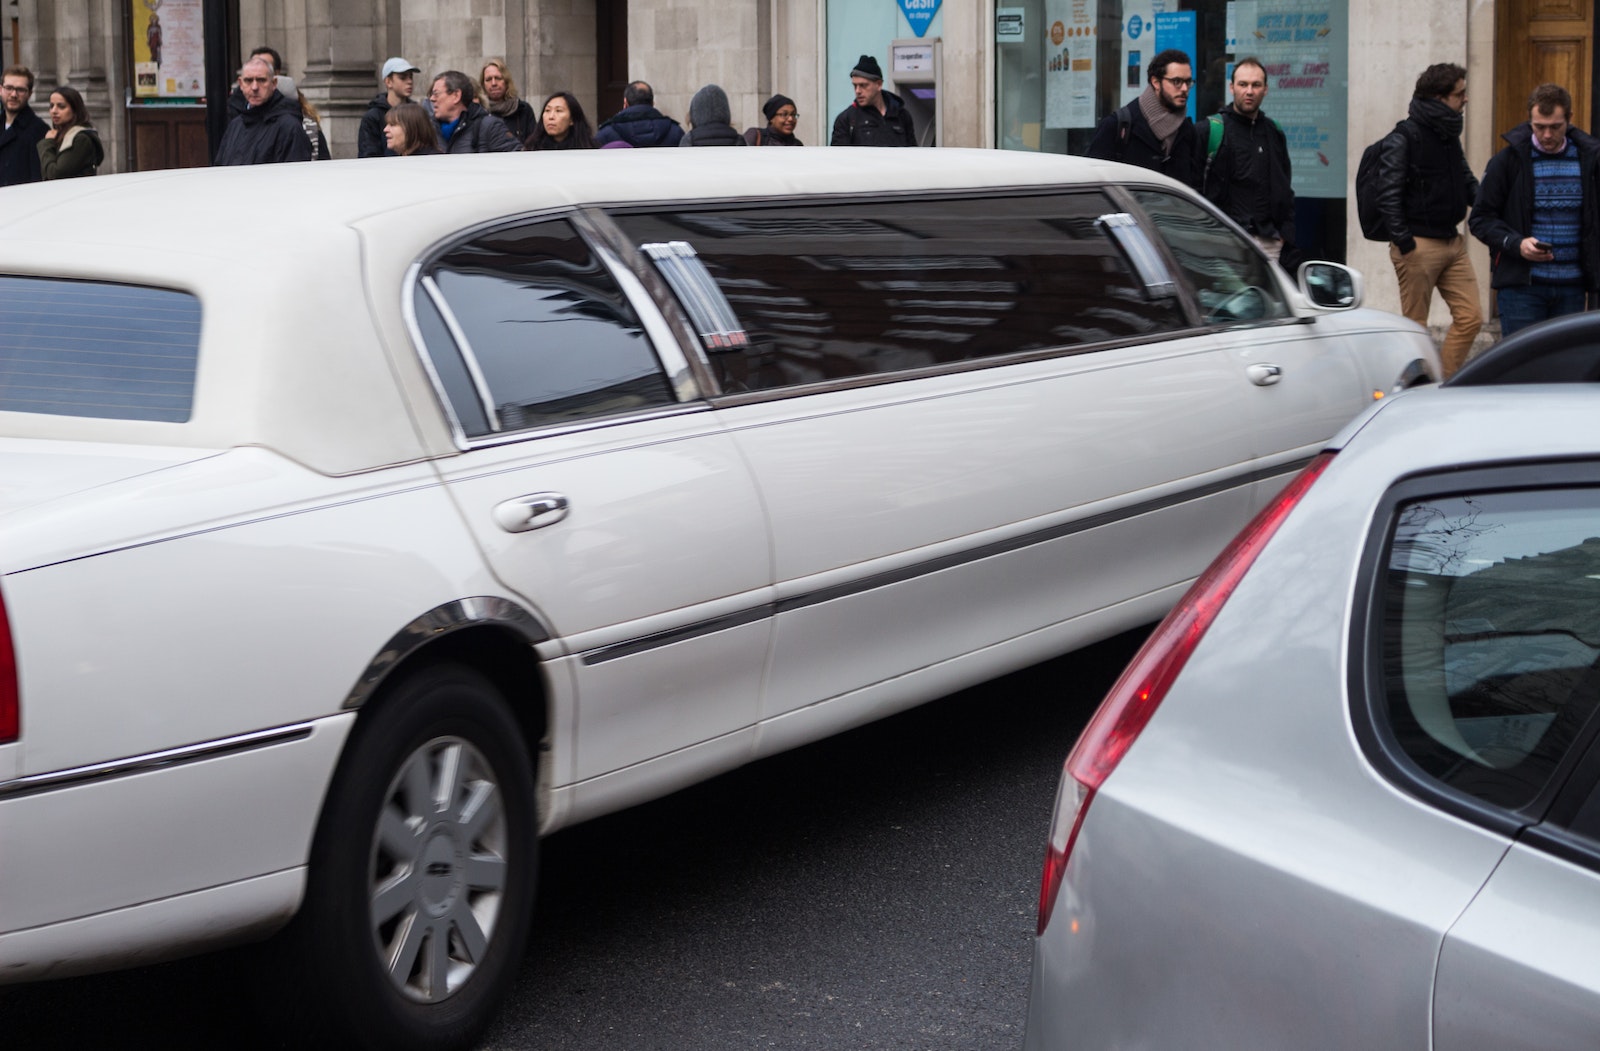 limo service White Limousin Car Parked on Building , denver limousine service